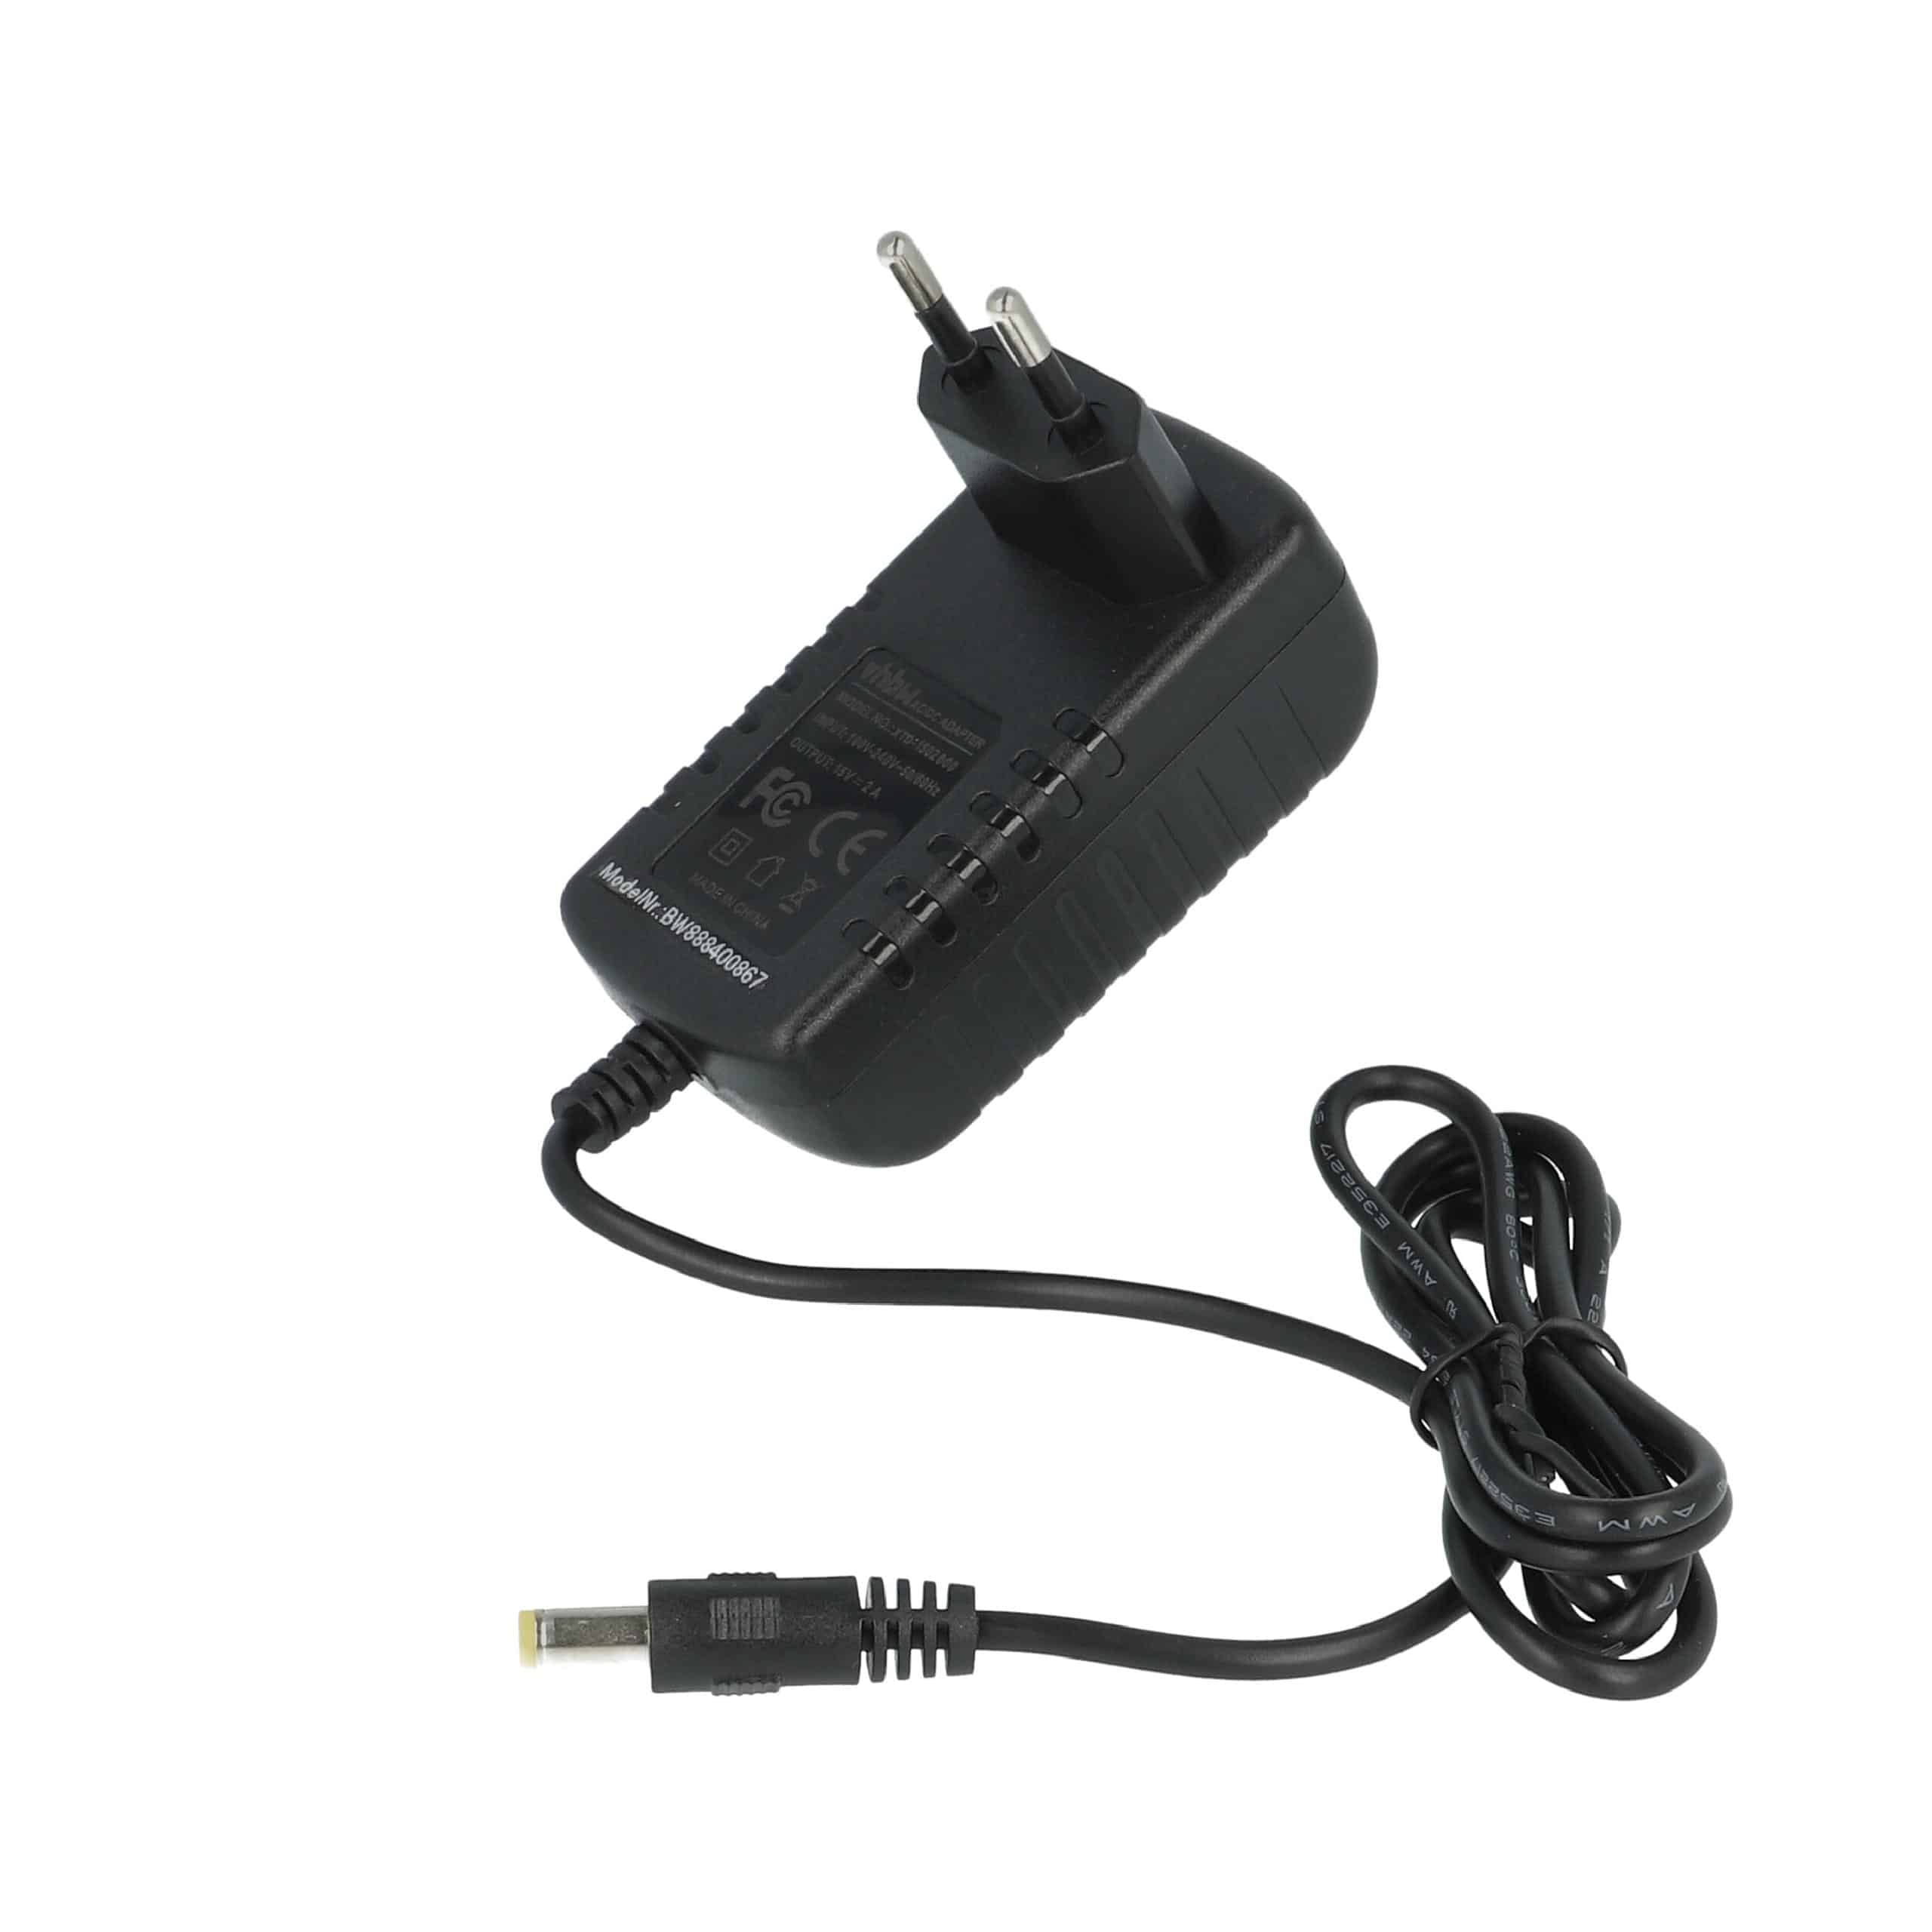 Mains Power Adapter suitable for GFP181DA-1512-1 PhilipsLoudspeaker etc., 15 V, 2.0 A